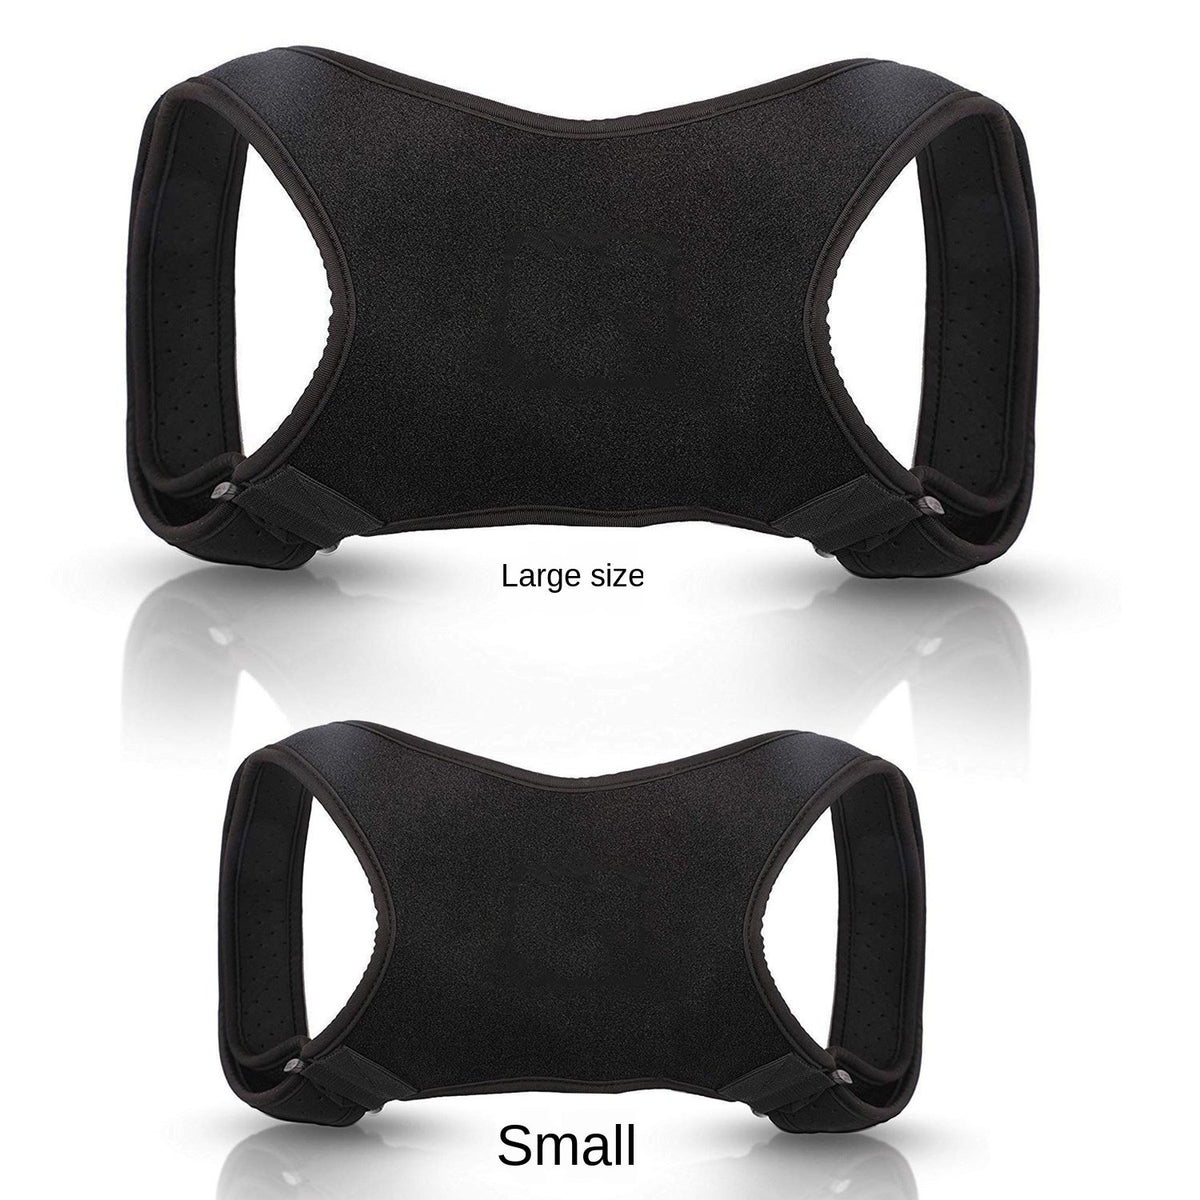 anti-Humpback posture correction belt